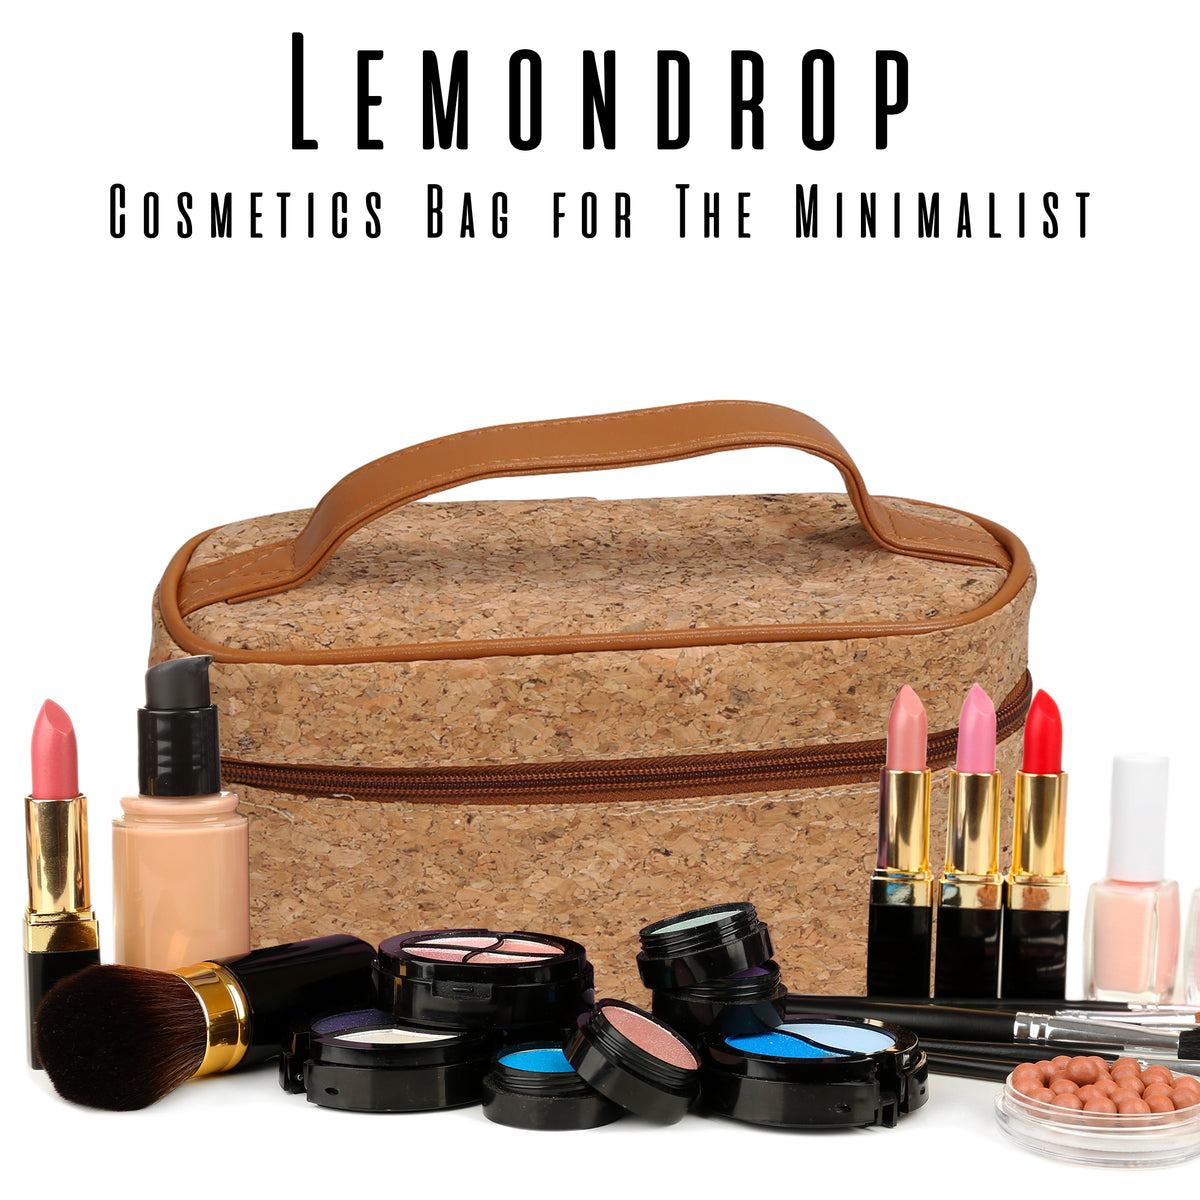 Cork Cosmetics Bag Lemondrop - Primeware Inc.